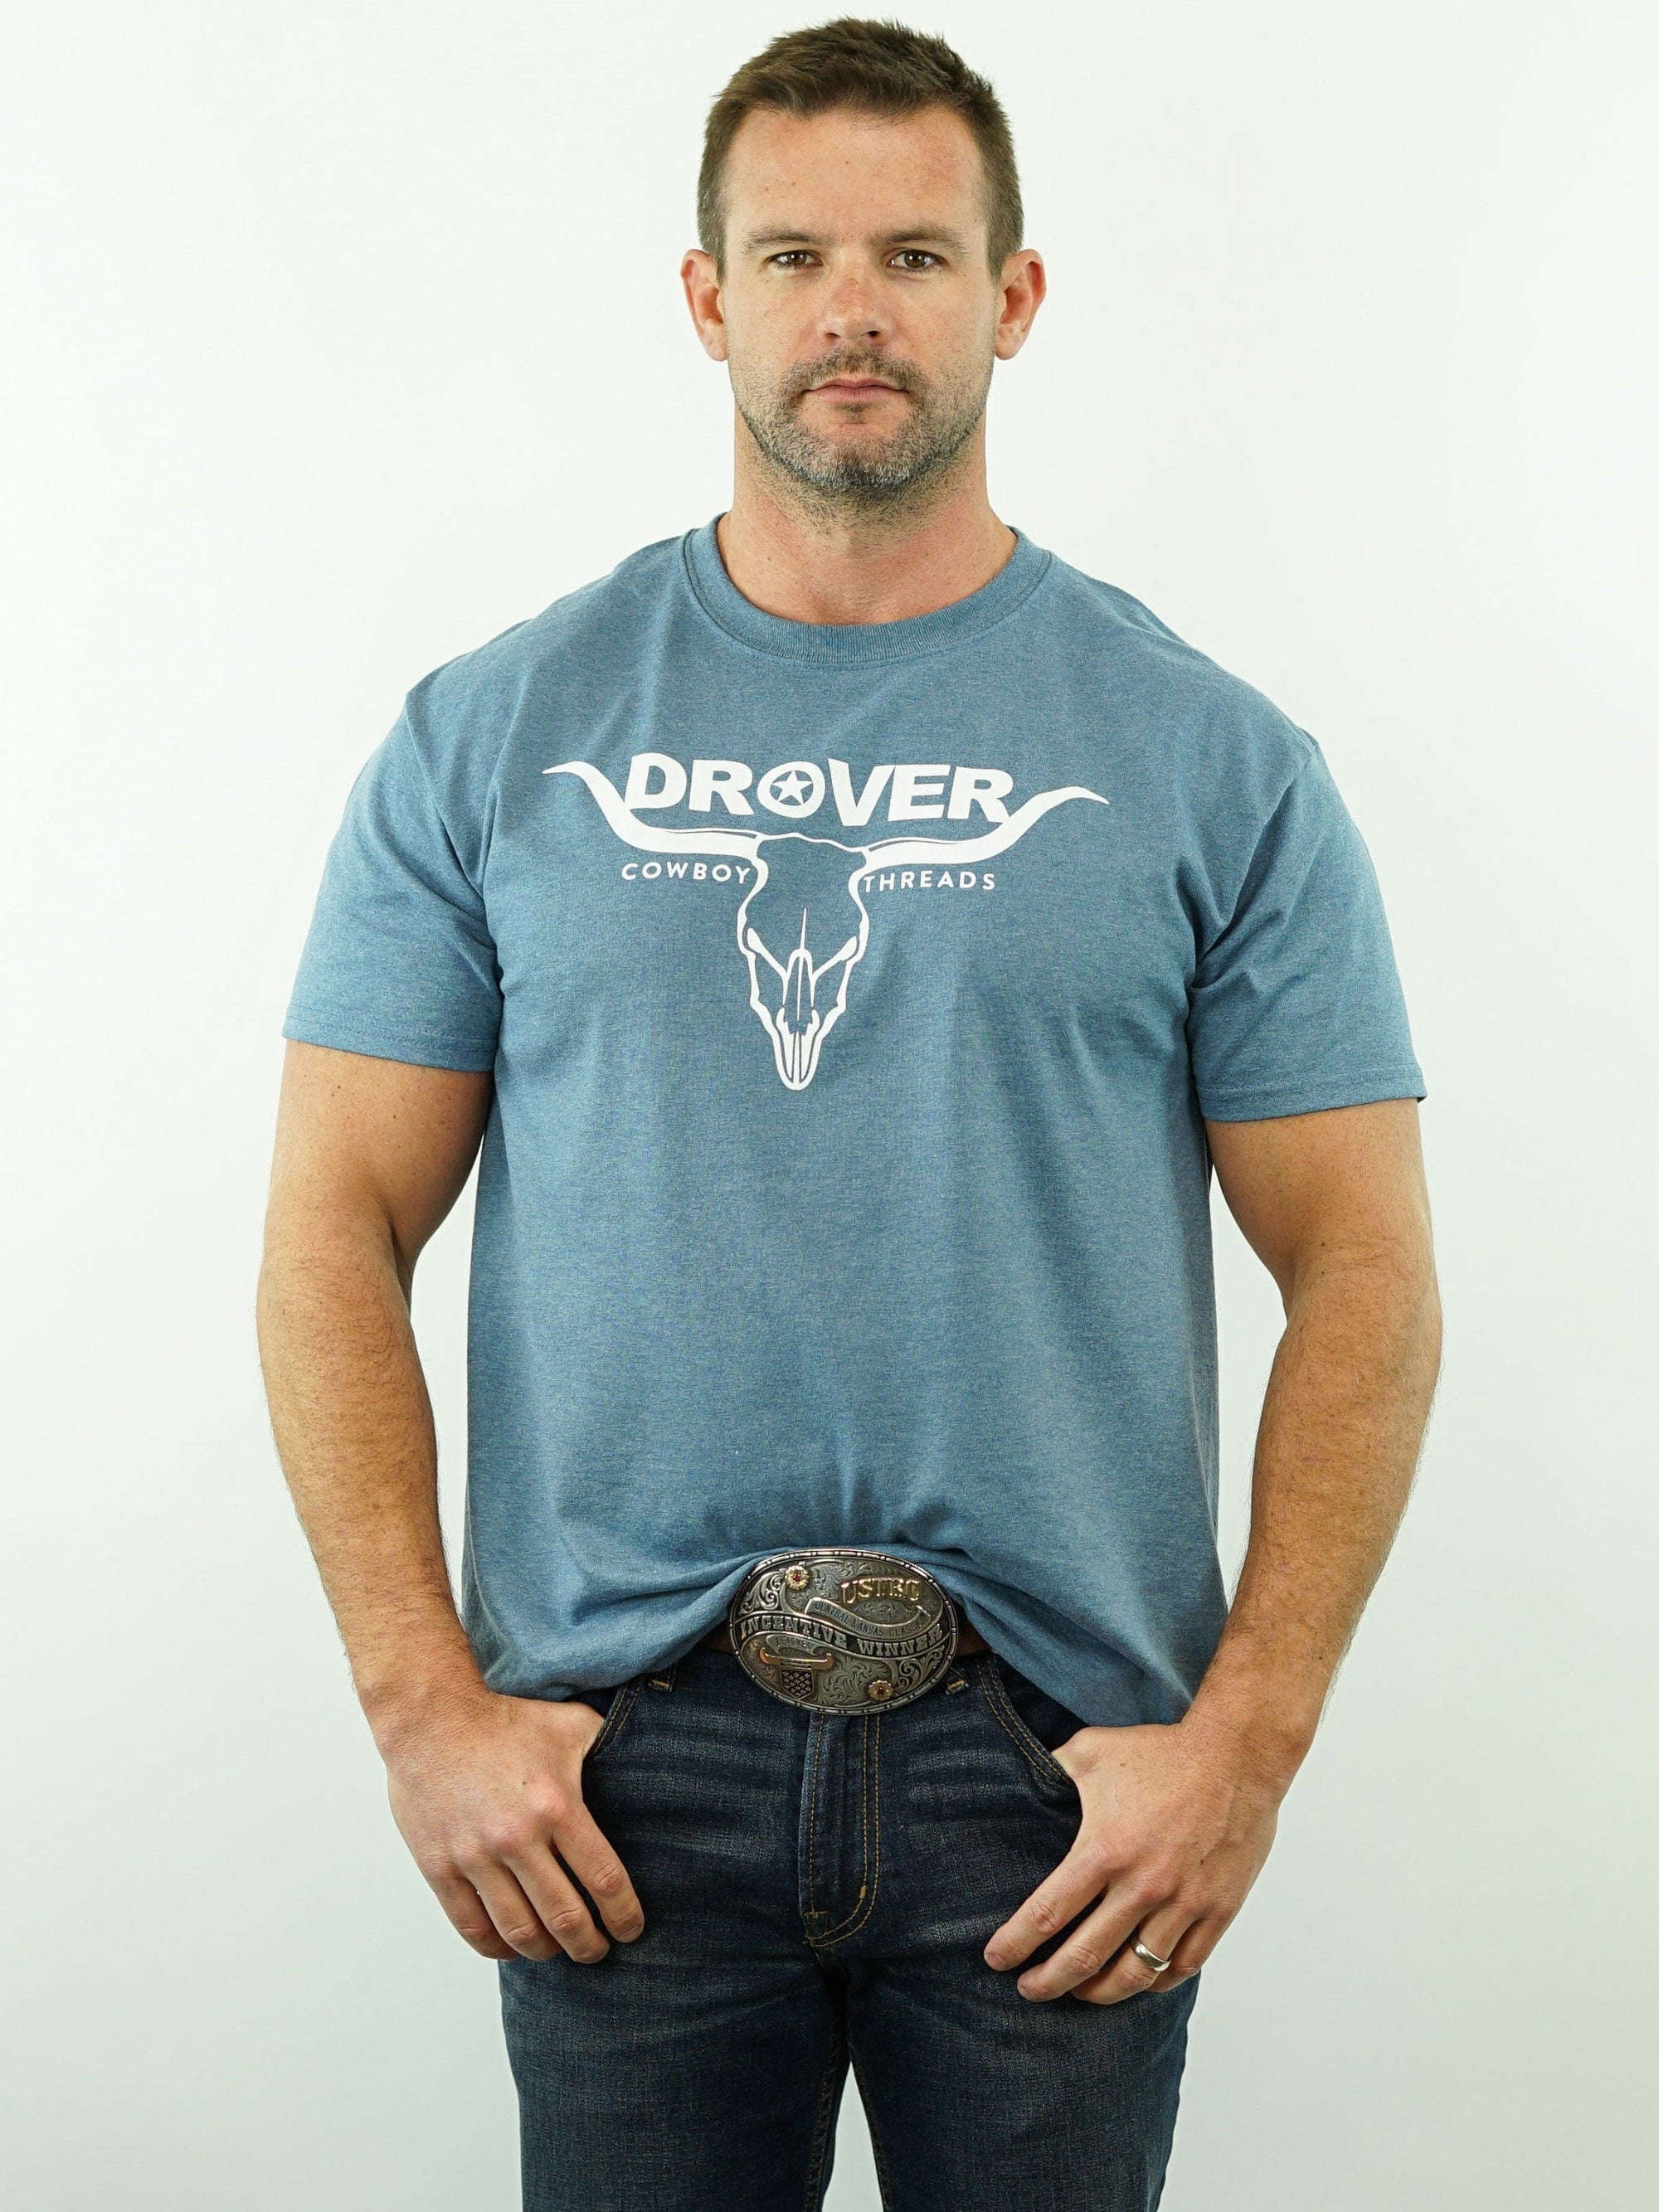 Drover Cowboy Threads Shirts T-Shirt - Drover Bull Skull - Blue Heather